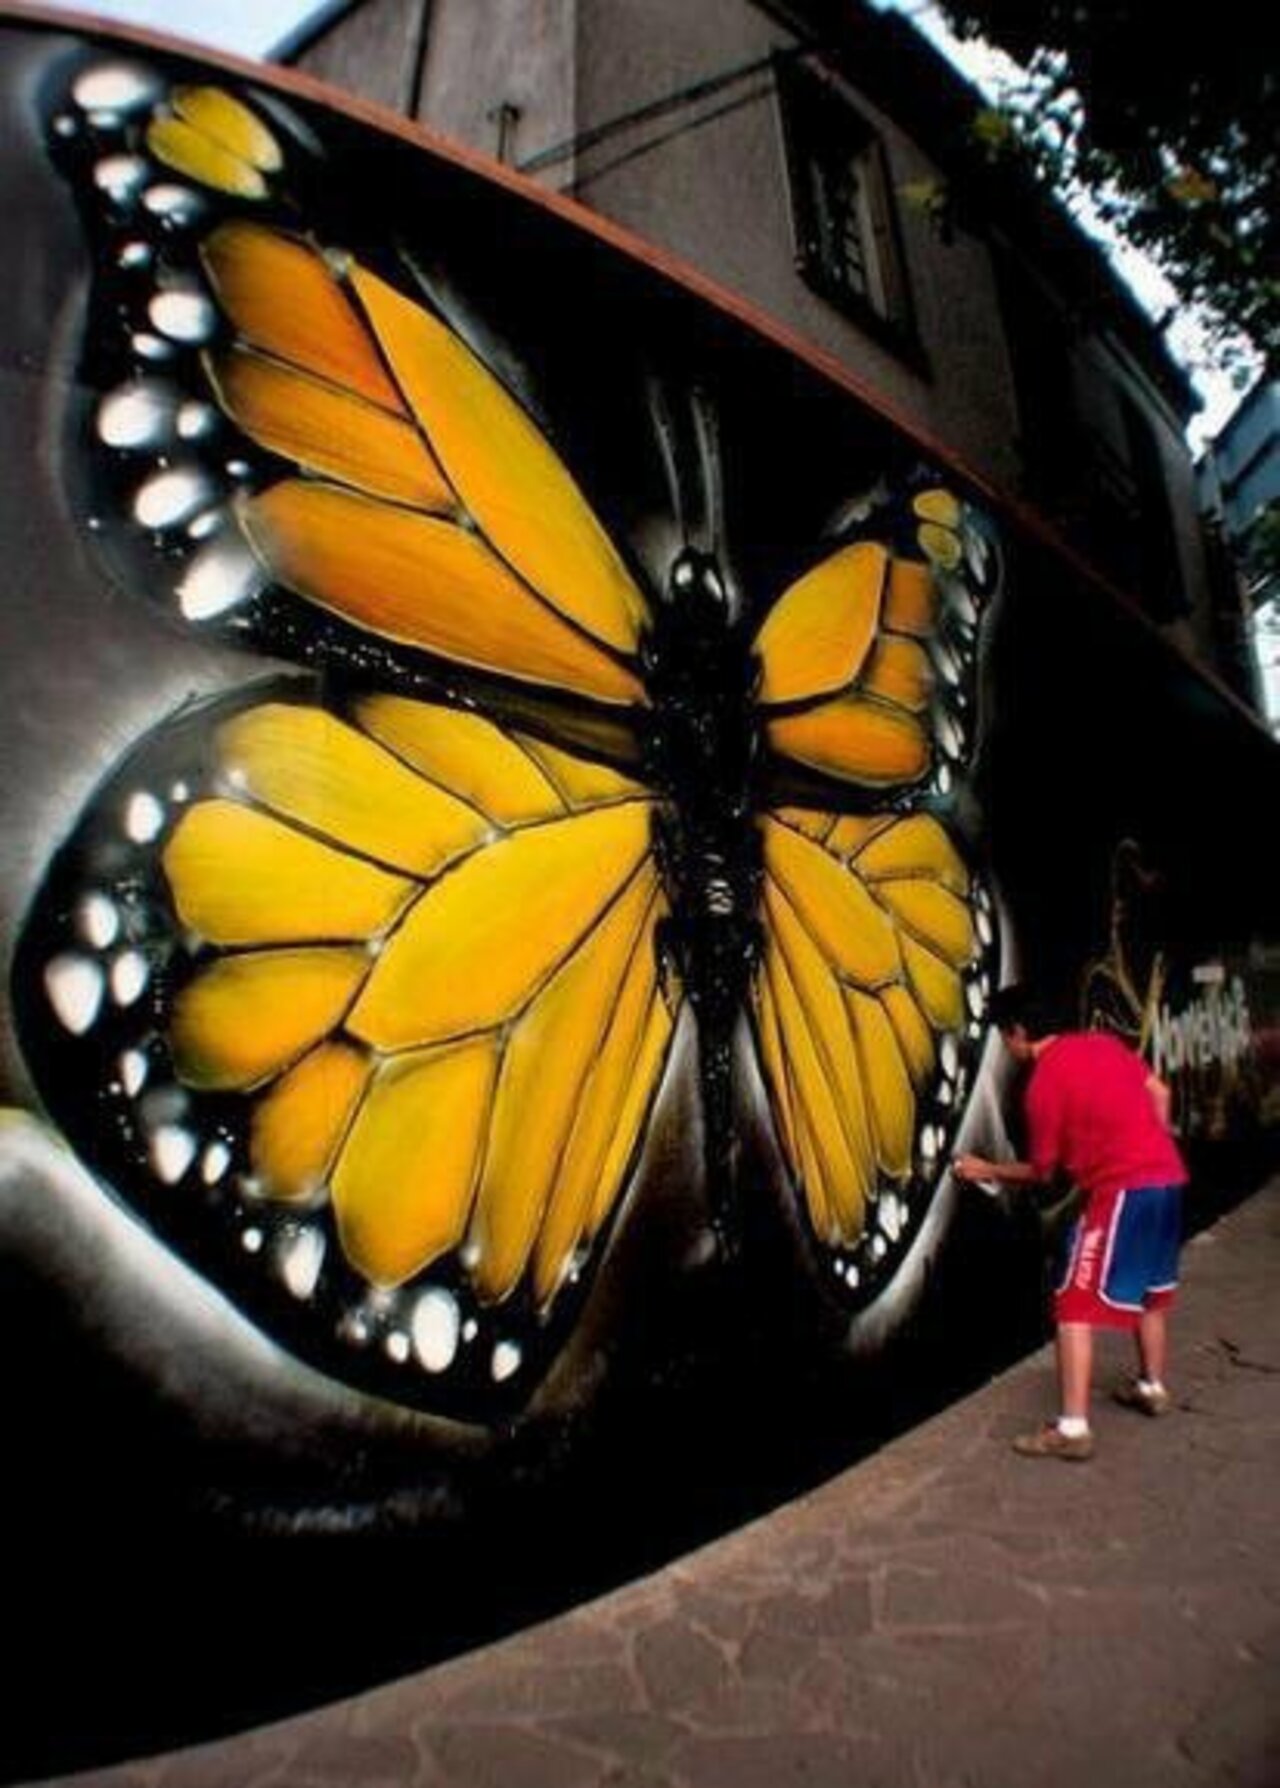 #butterfly #streetart by #FabioLopes #Brazil #switch #graffiti #bedifferent #art #arte https://t.co/mnHlZx1K6h